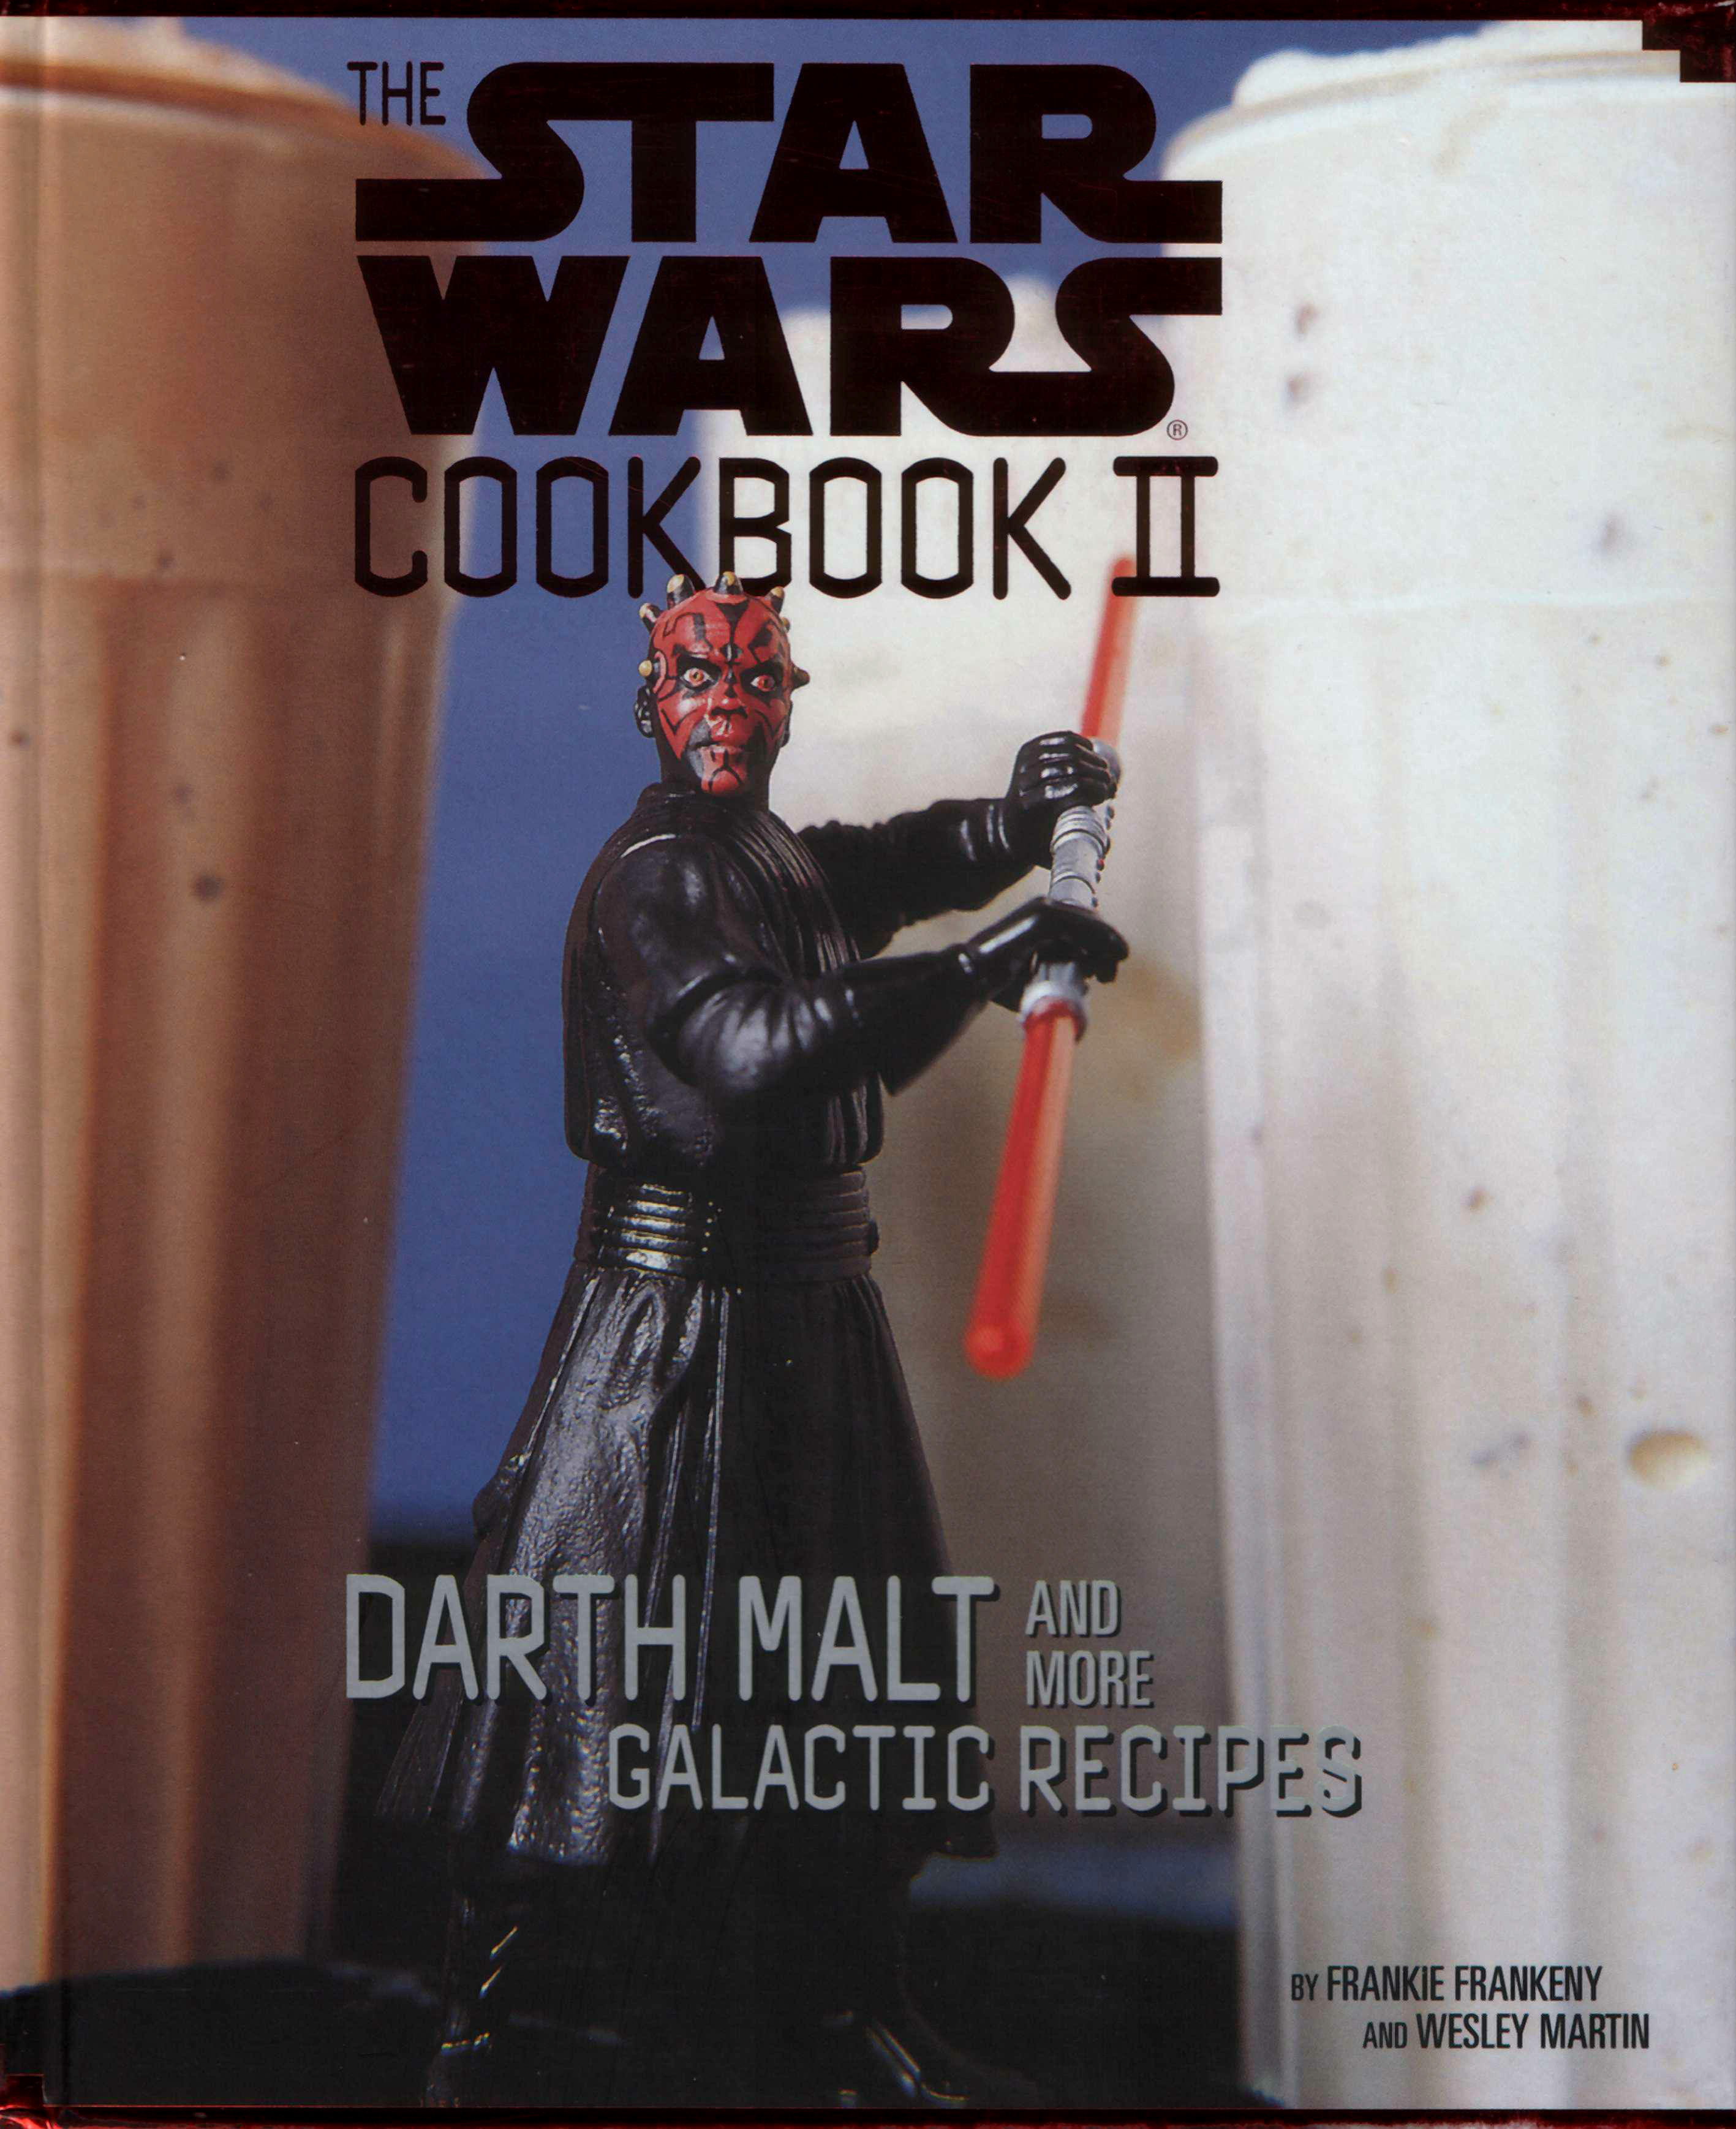 The Star Wars Cookbook II Darth Malt and More Galactic Recipes
Epub-Ebook